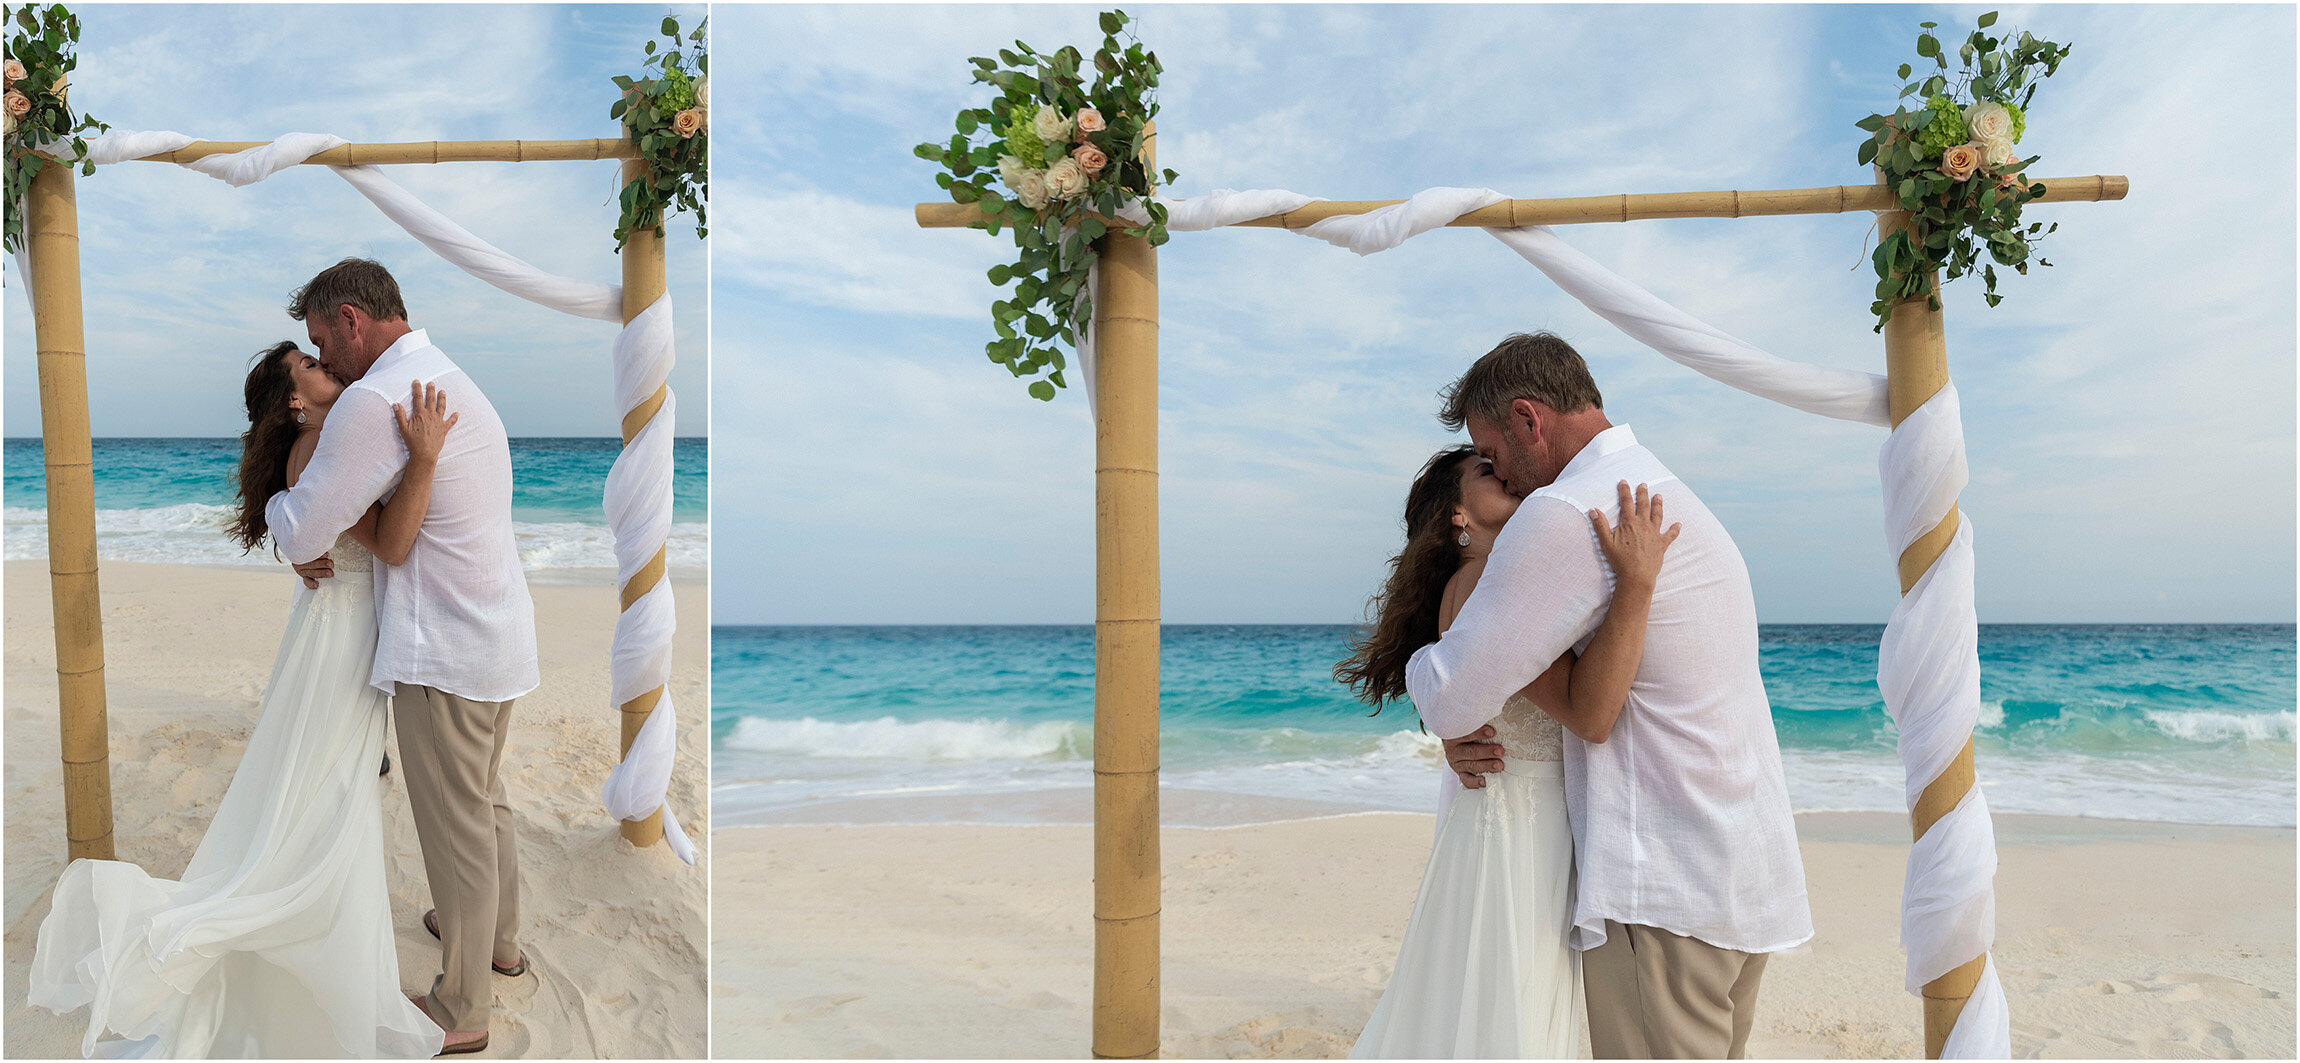 Rosewood Bermuda Wedding Photographer_©FianderFoto_064.jpg